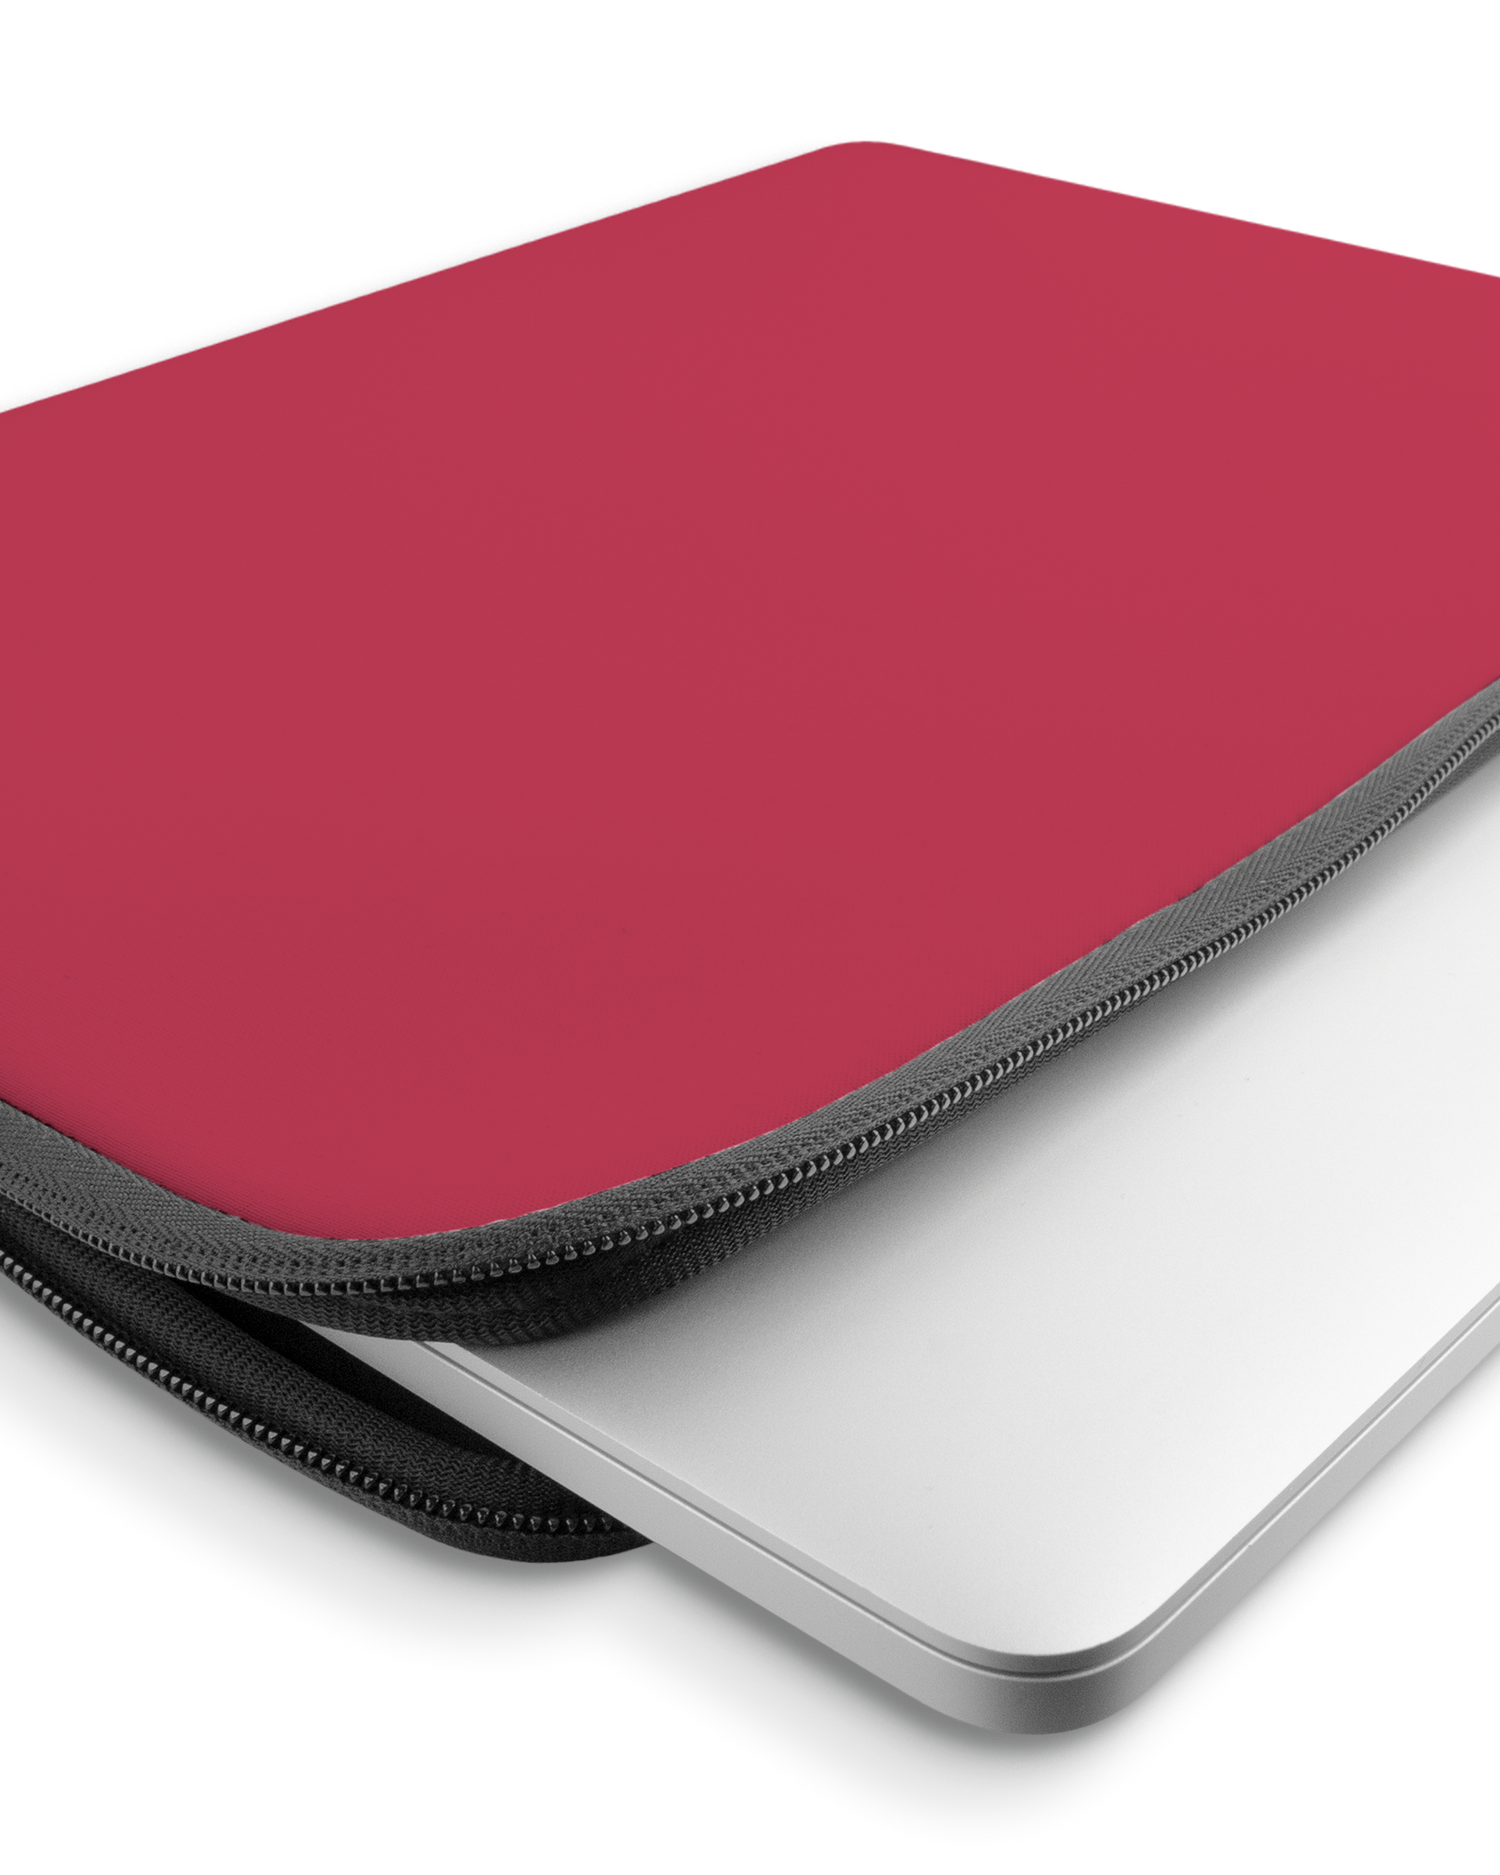 RED Laptophülle 15-16 Zoll mit Gerät im Inneren